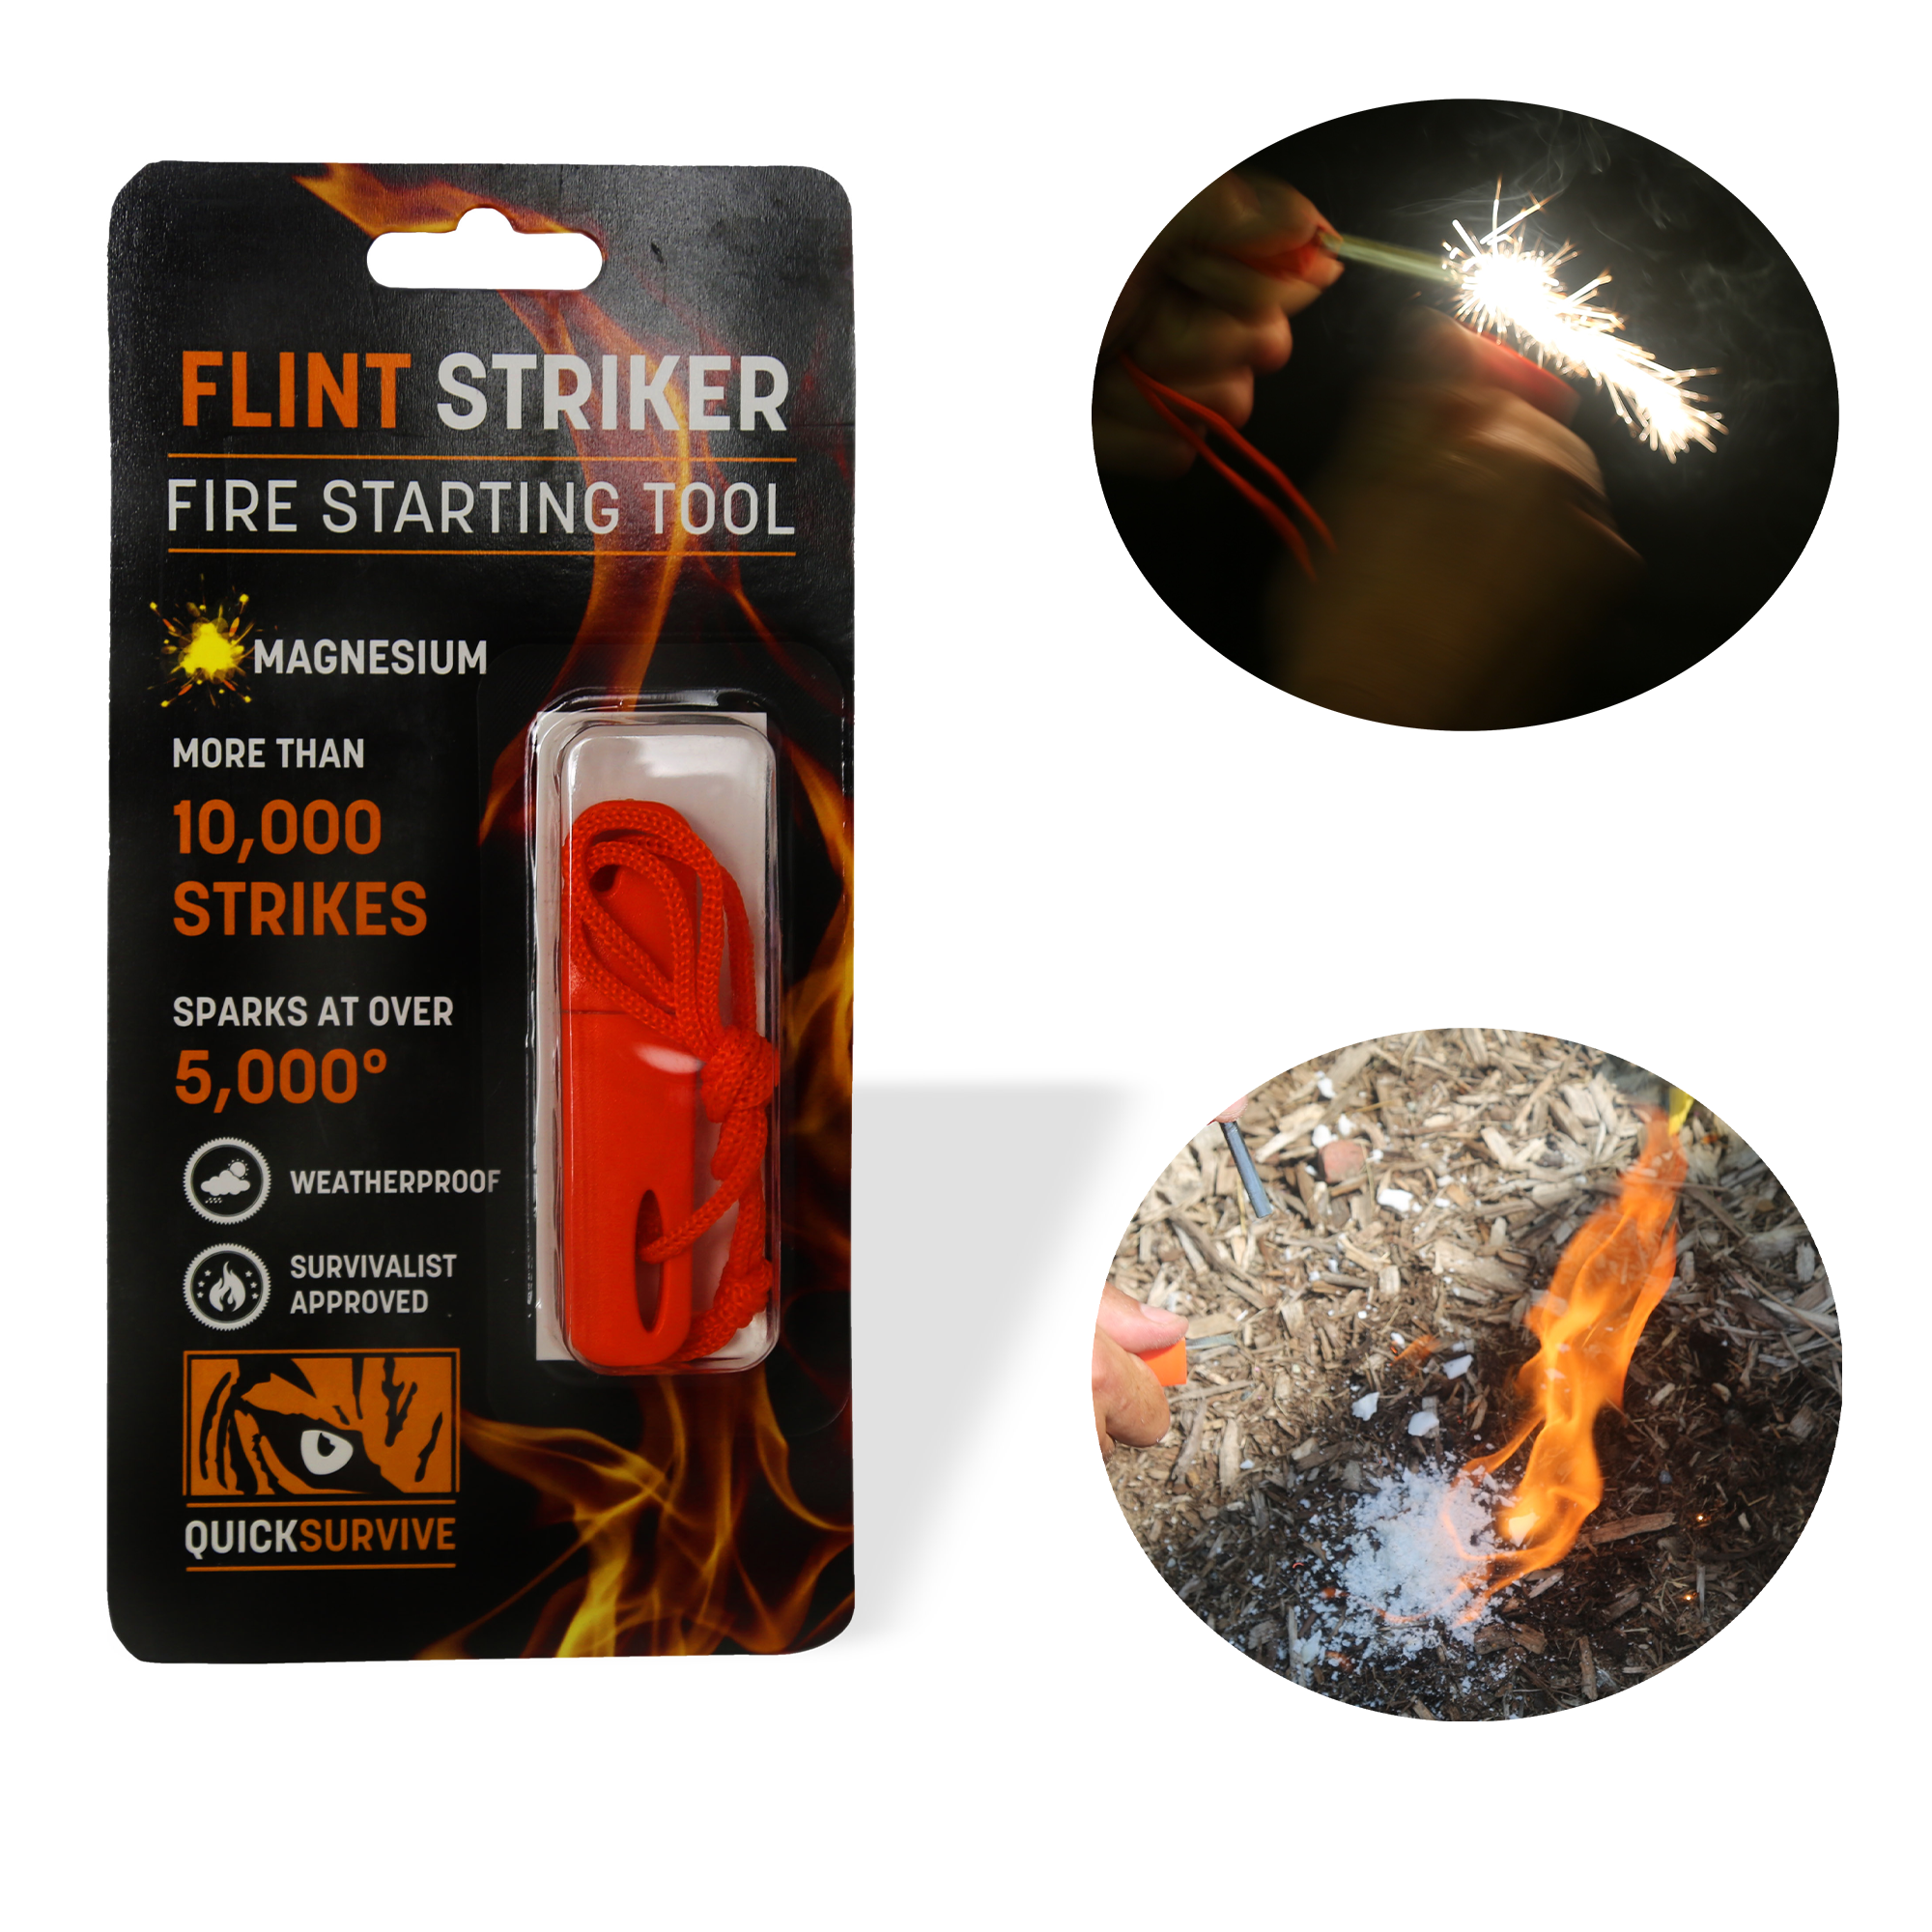 Flint Striker For Camping and Survival - Survivalist Approved - Flint Striker 10,000 Strikes - Magnesium Sparks at Over 5,000 degrees